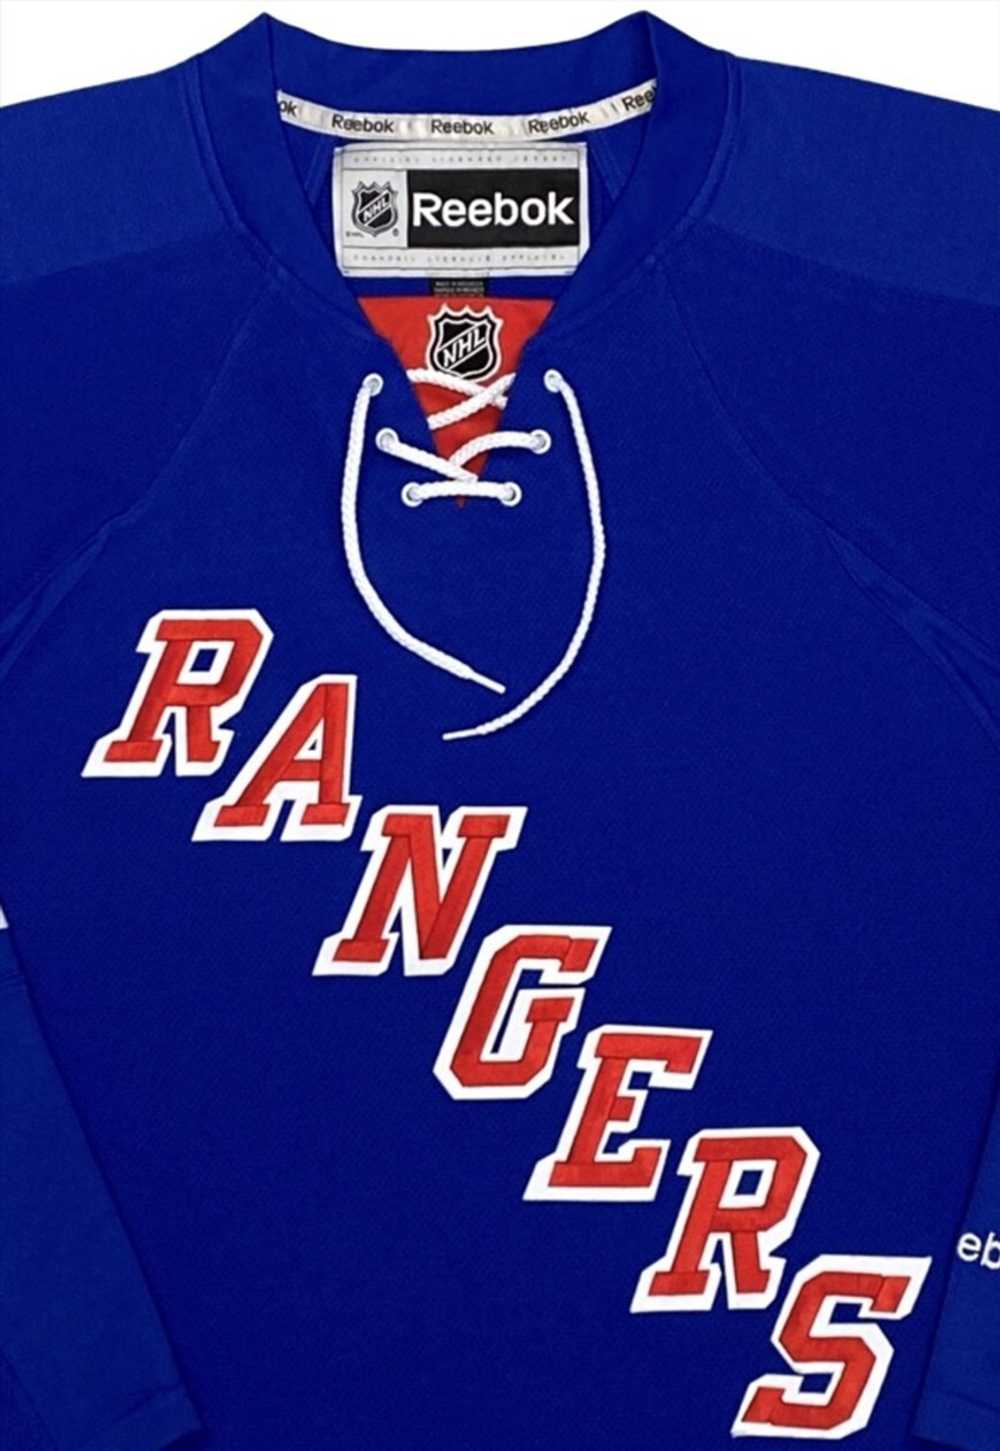 Reebok NHL New York Rangers Blue Hockey Jersey L - image 2